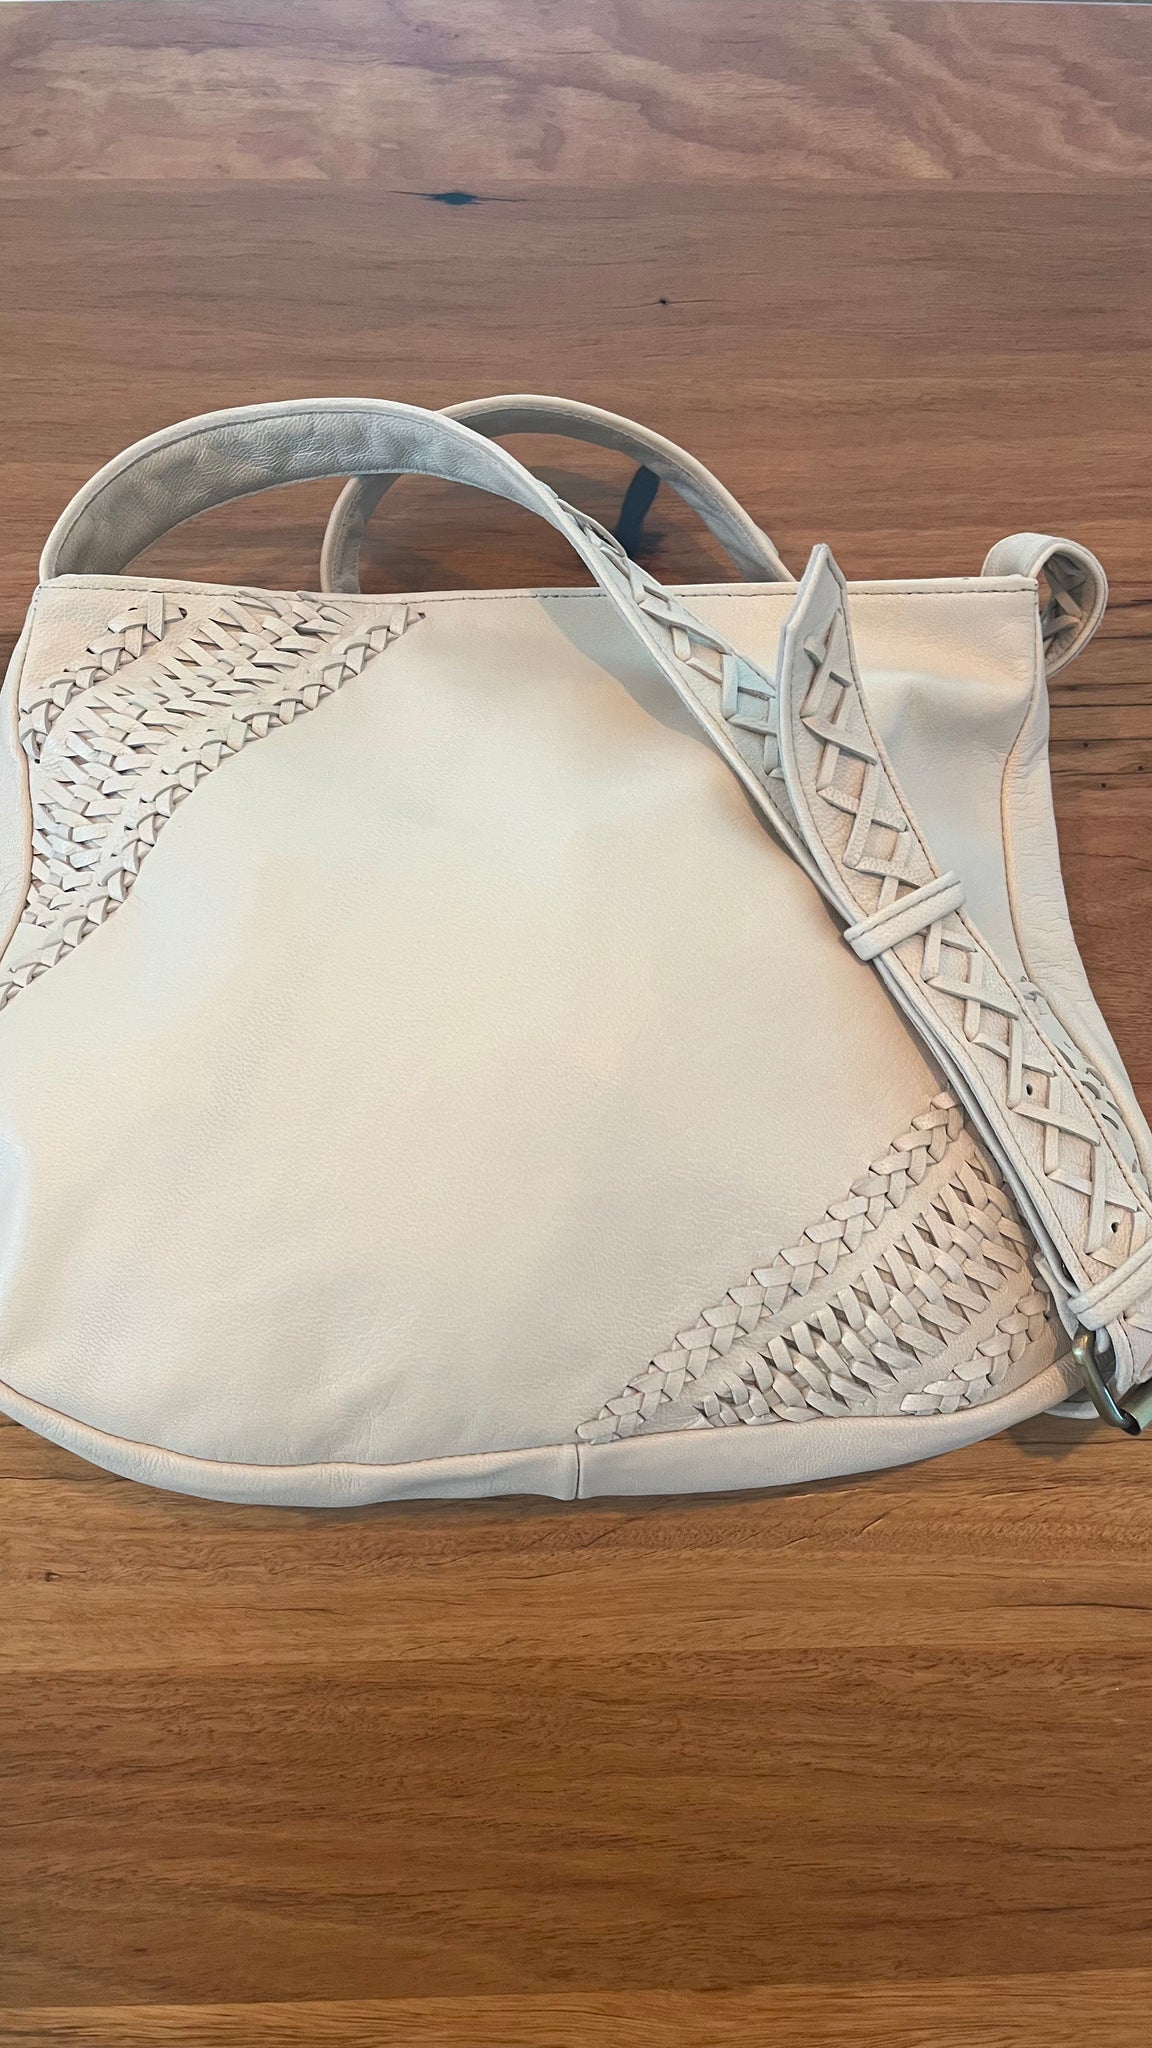 Tasha Leather Bag - Cream